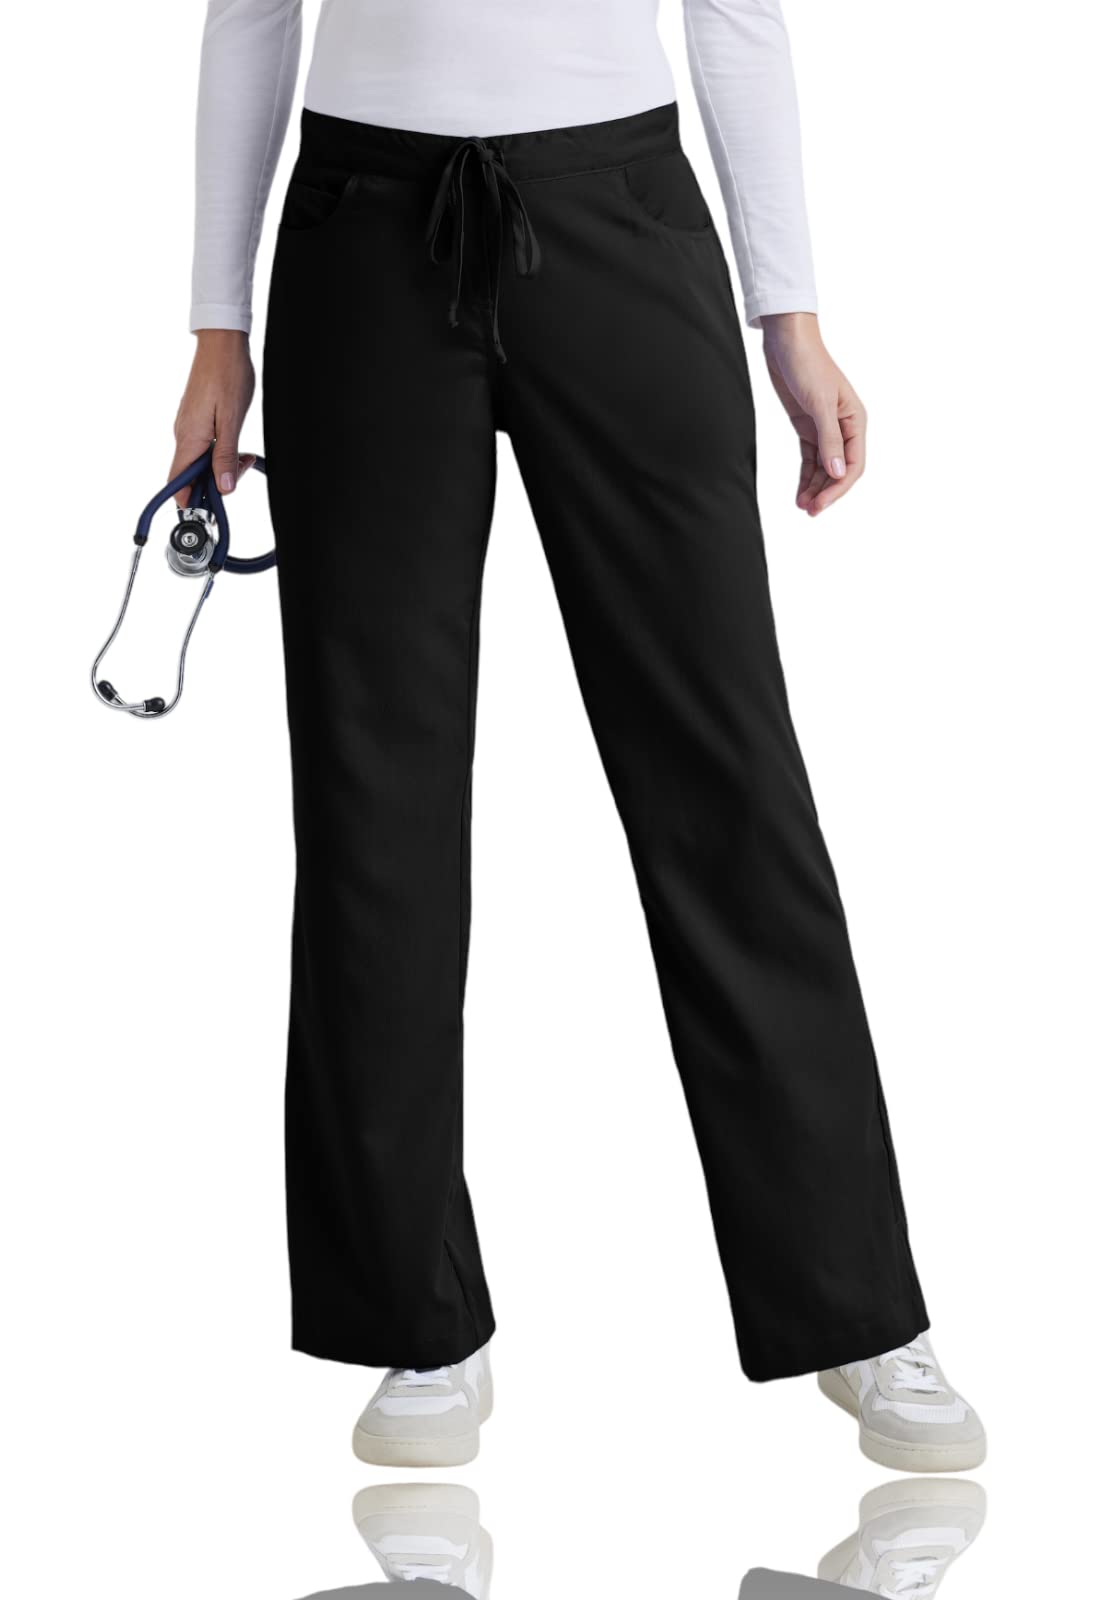 BARCO Grey's Anatomy Scrubs - Riley Scrub Pant for Women Elastic